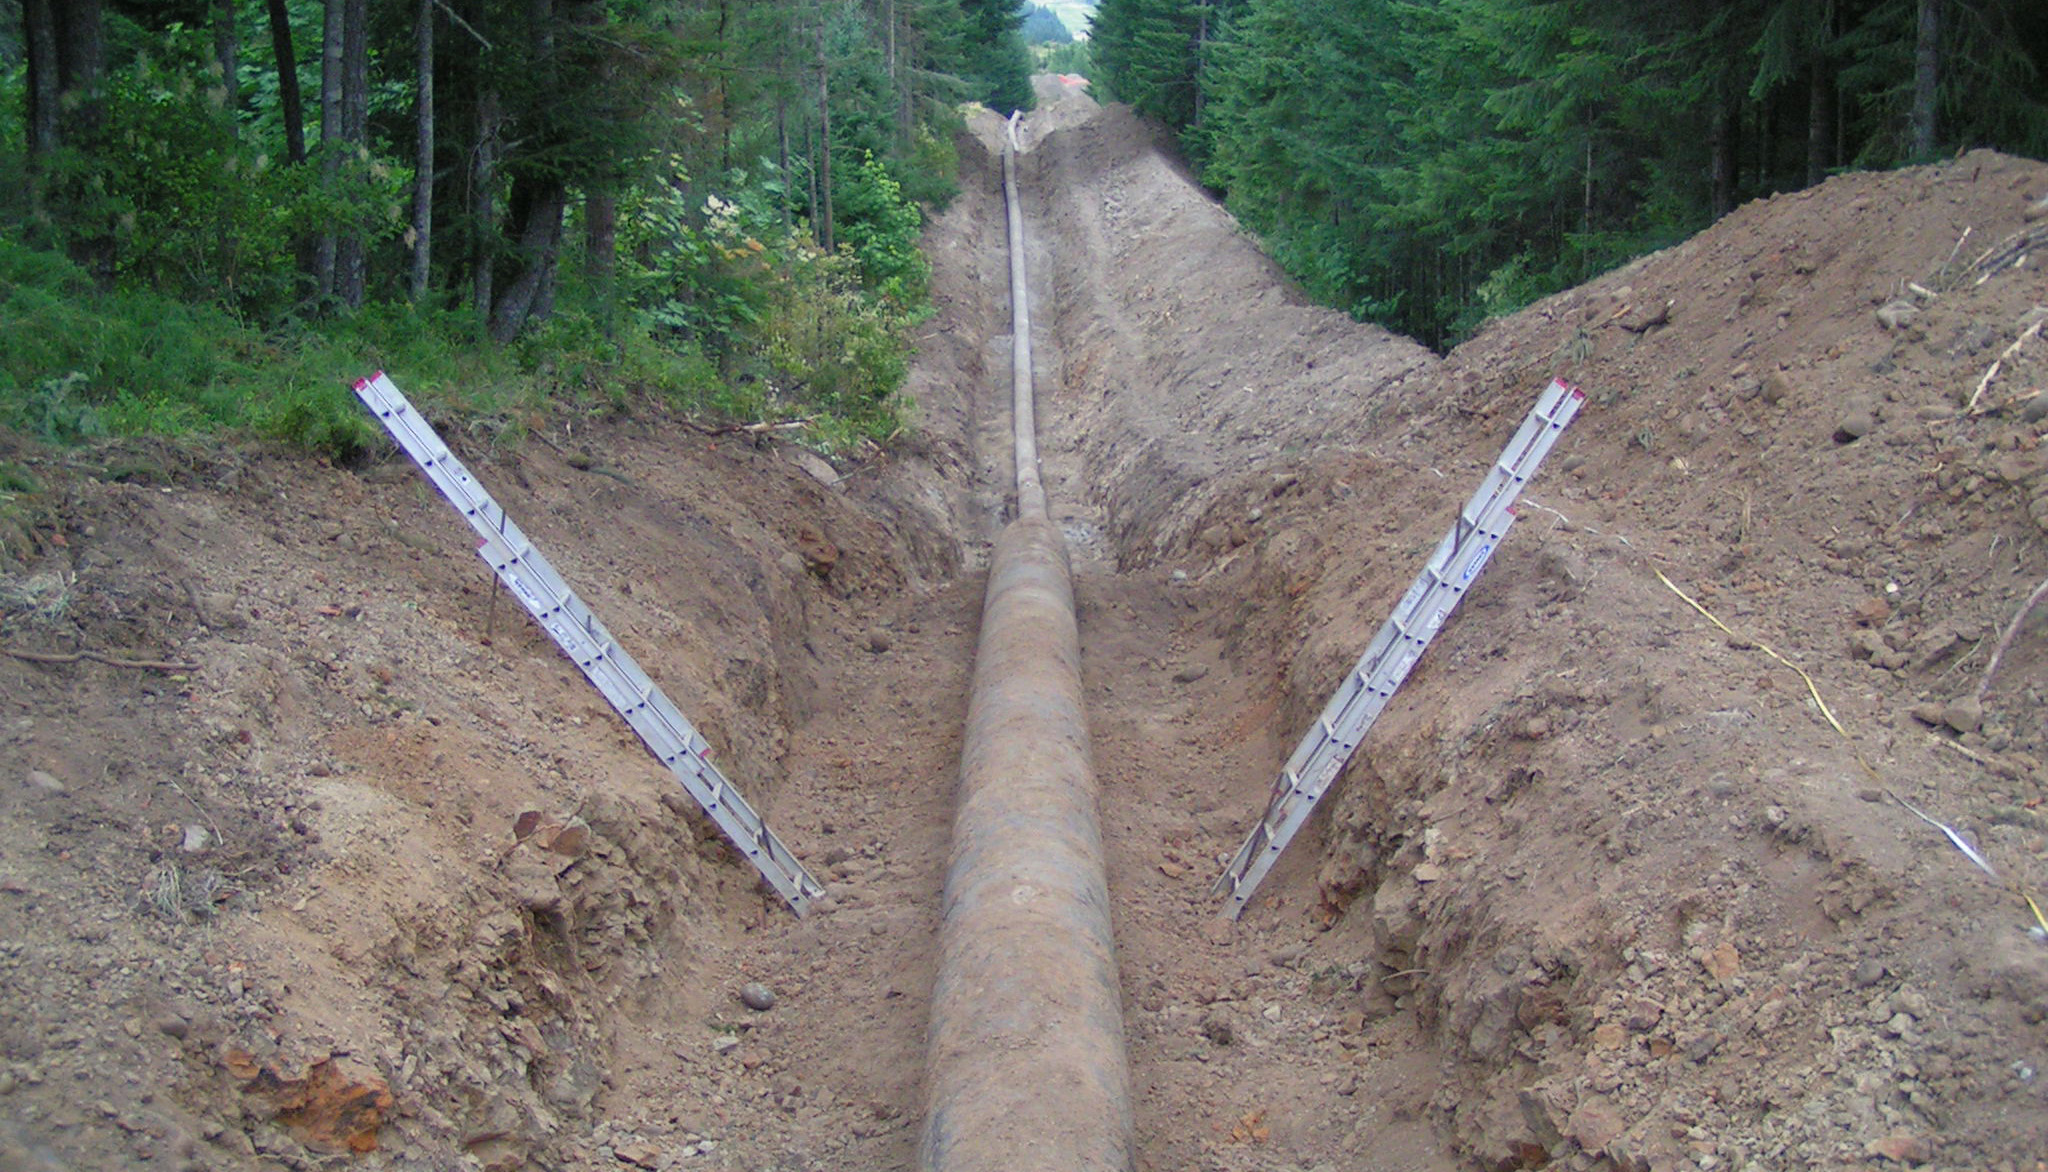 Pipeline Maintenance